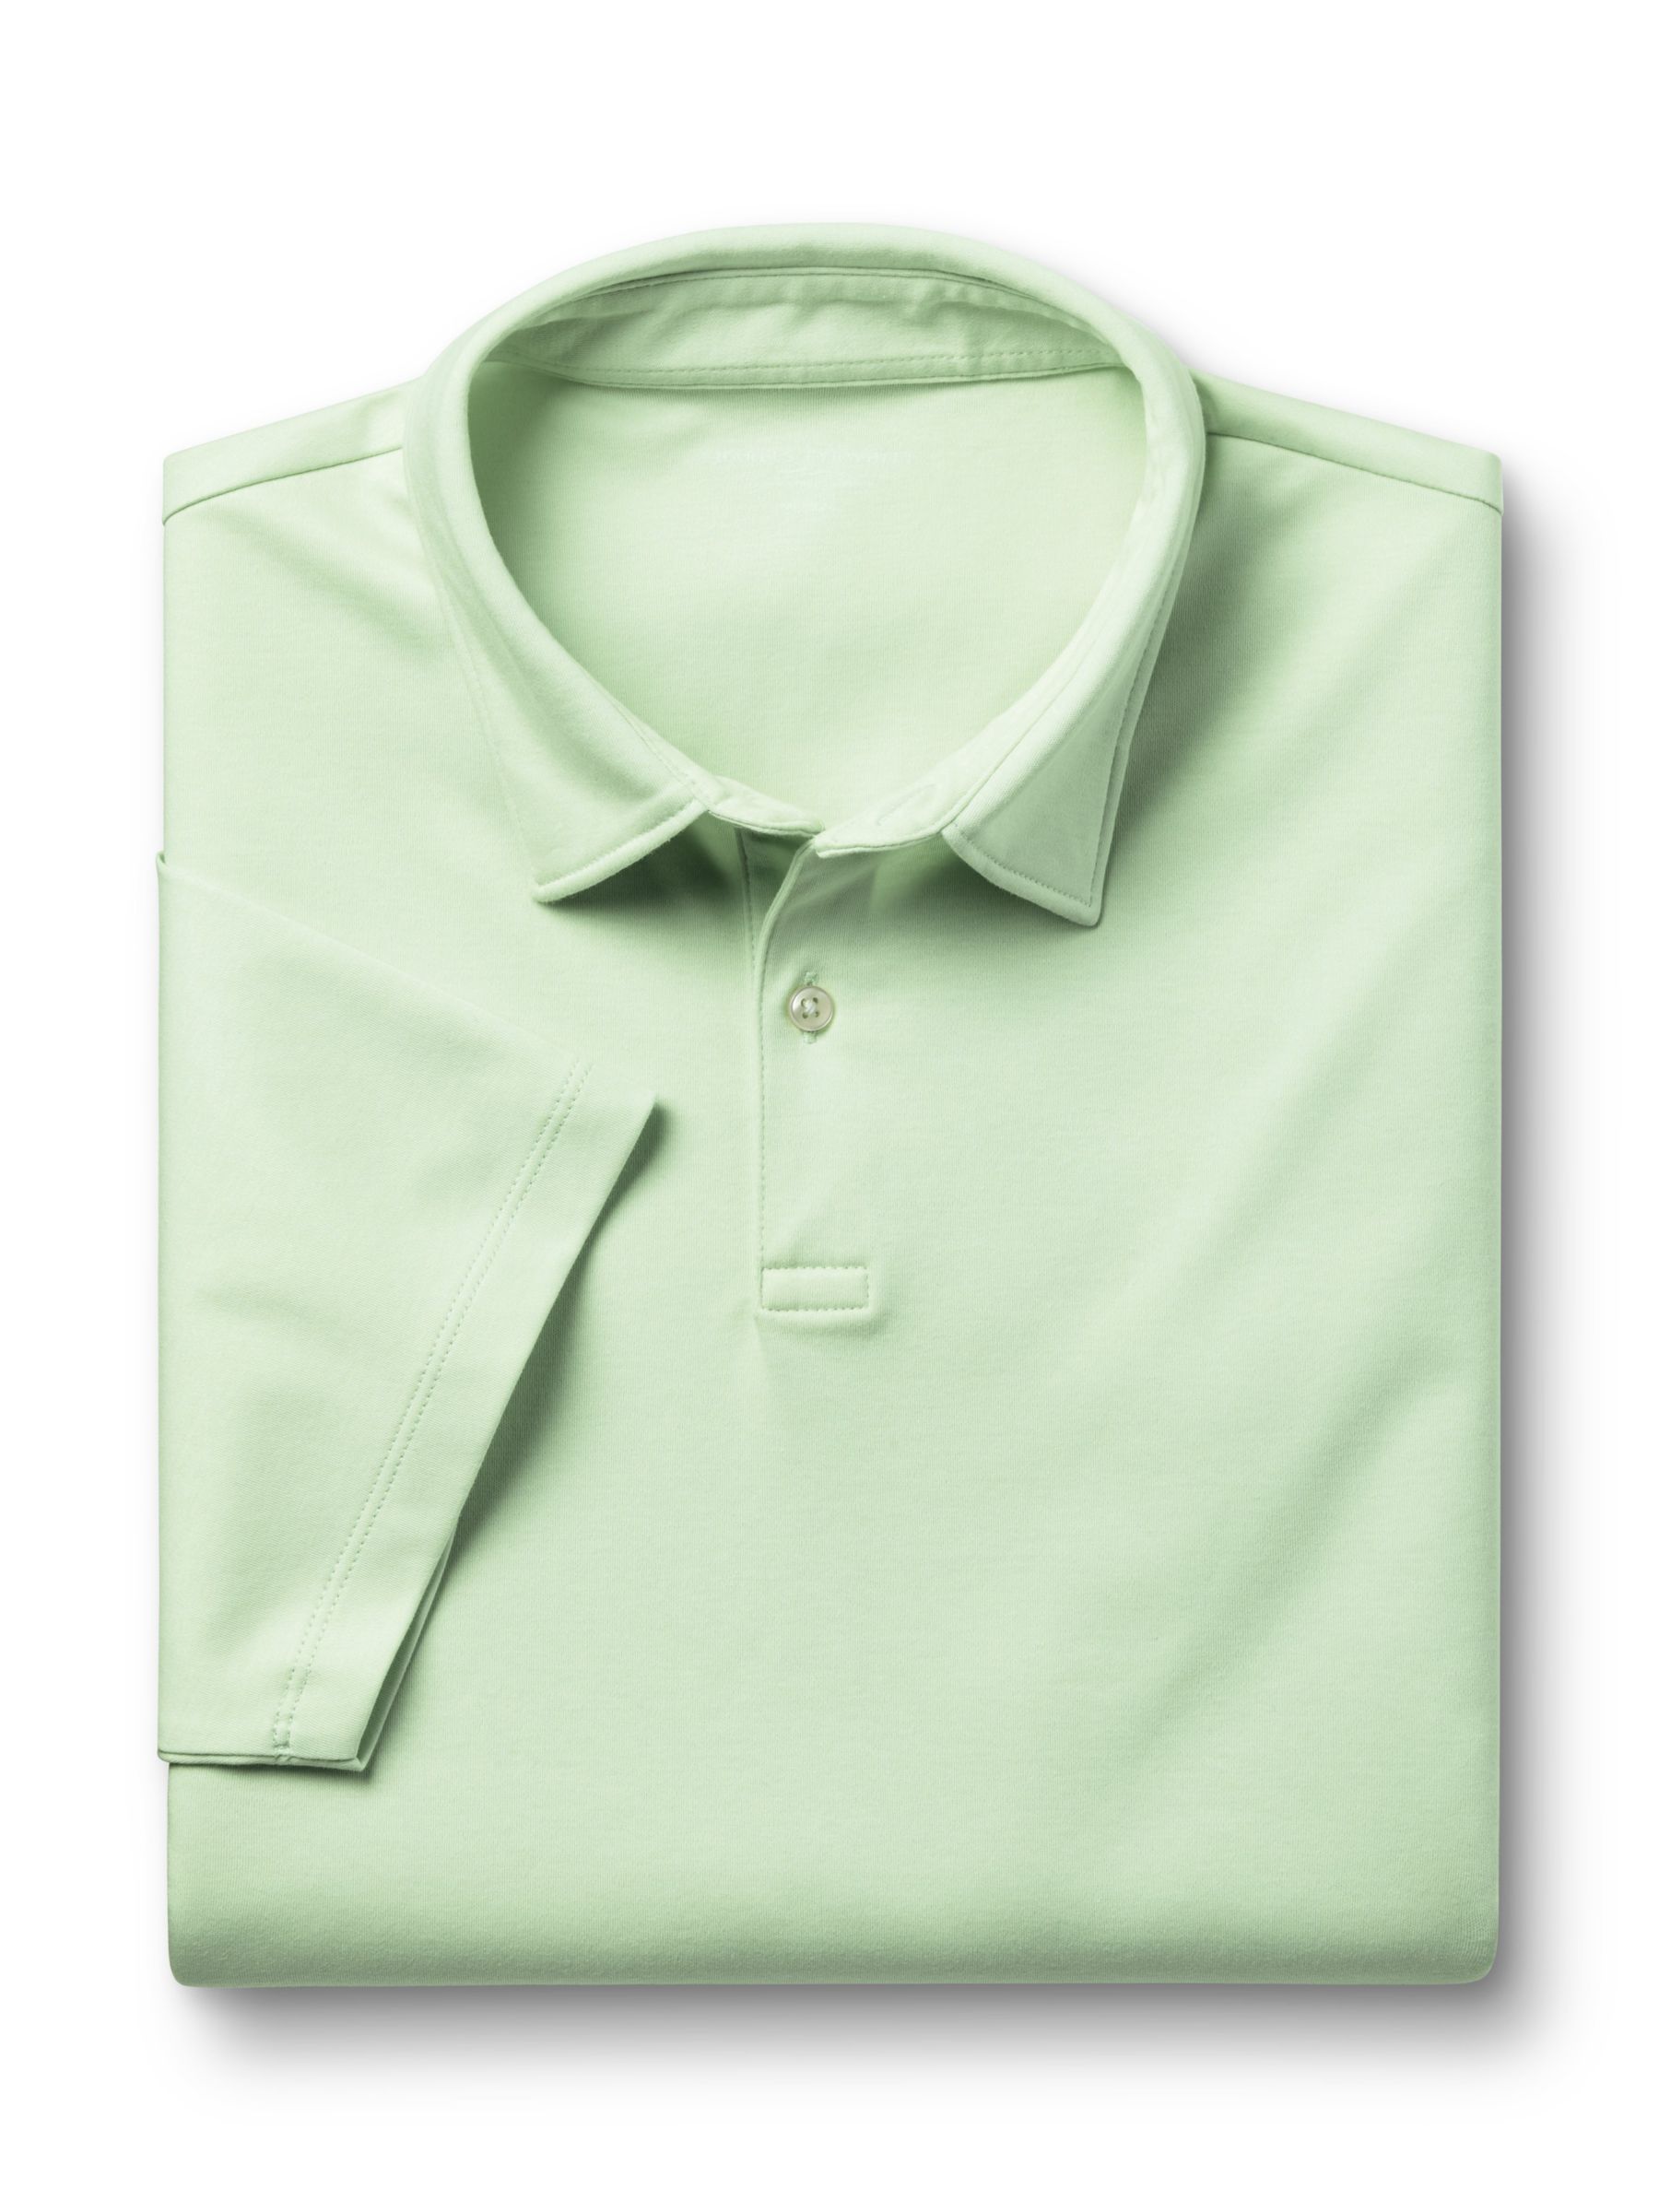 Buy Charles Tyrwhitt Short Sleeve Jersey Polo Shirt Online at johnlewis.com